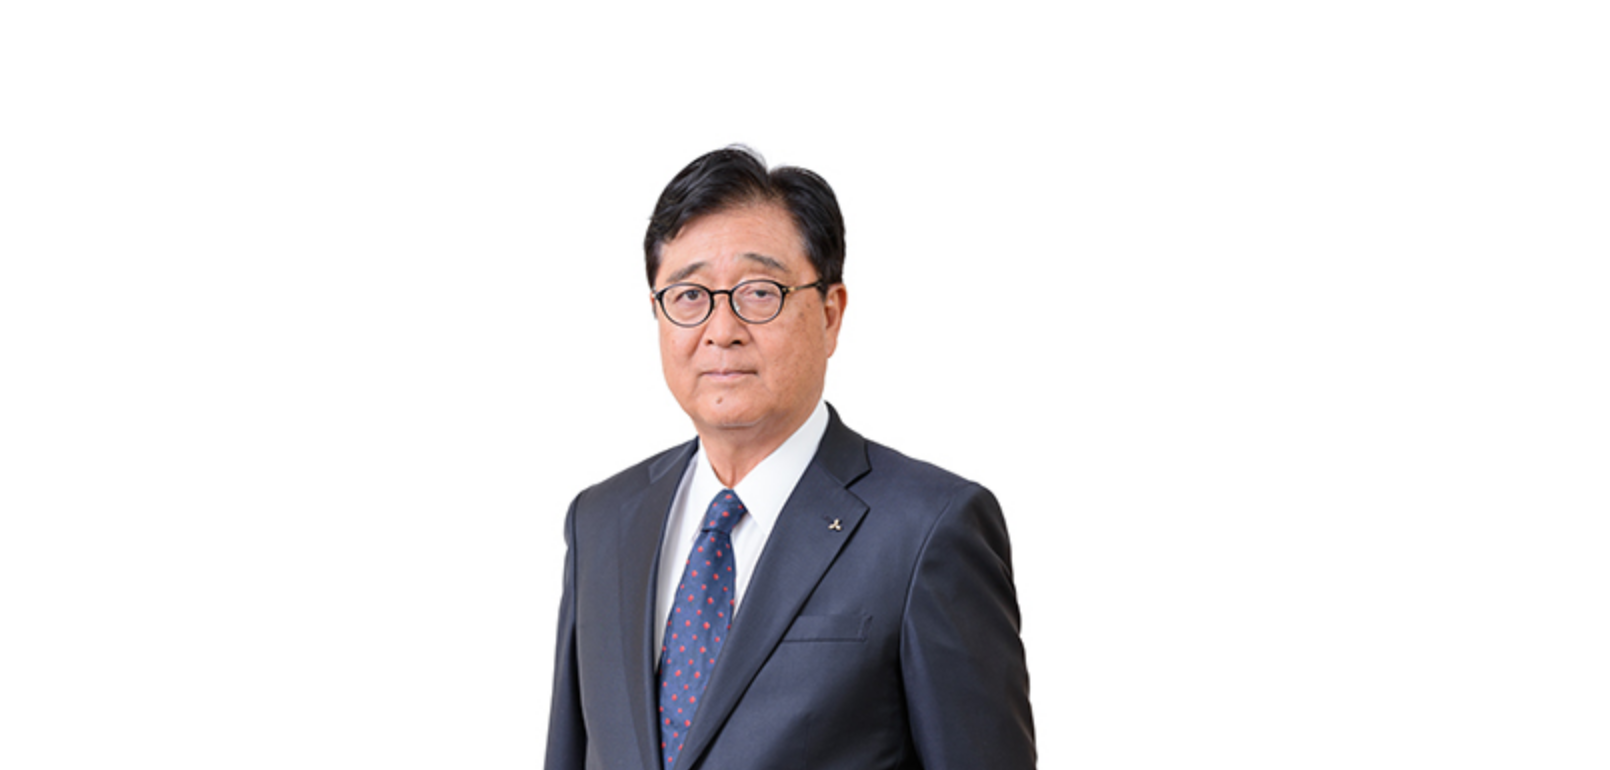 Former Mitsubishi President Masuko deceased